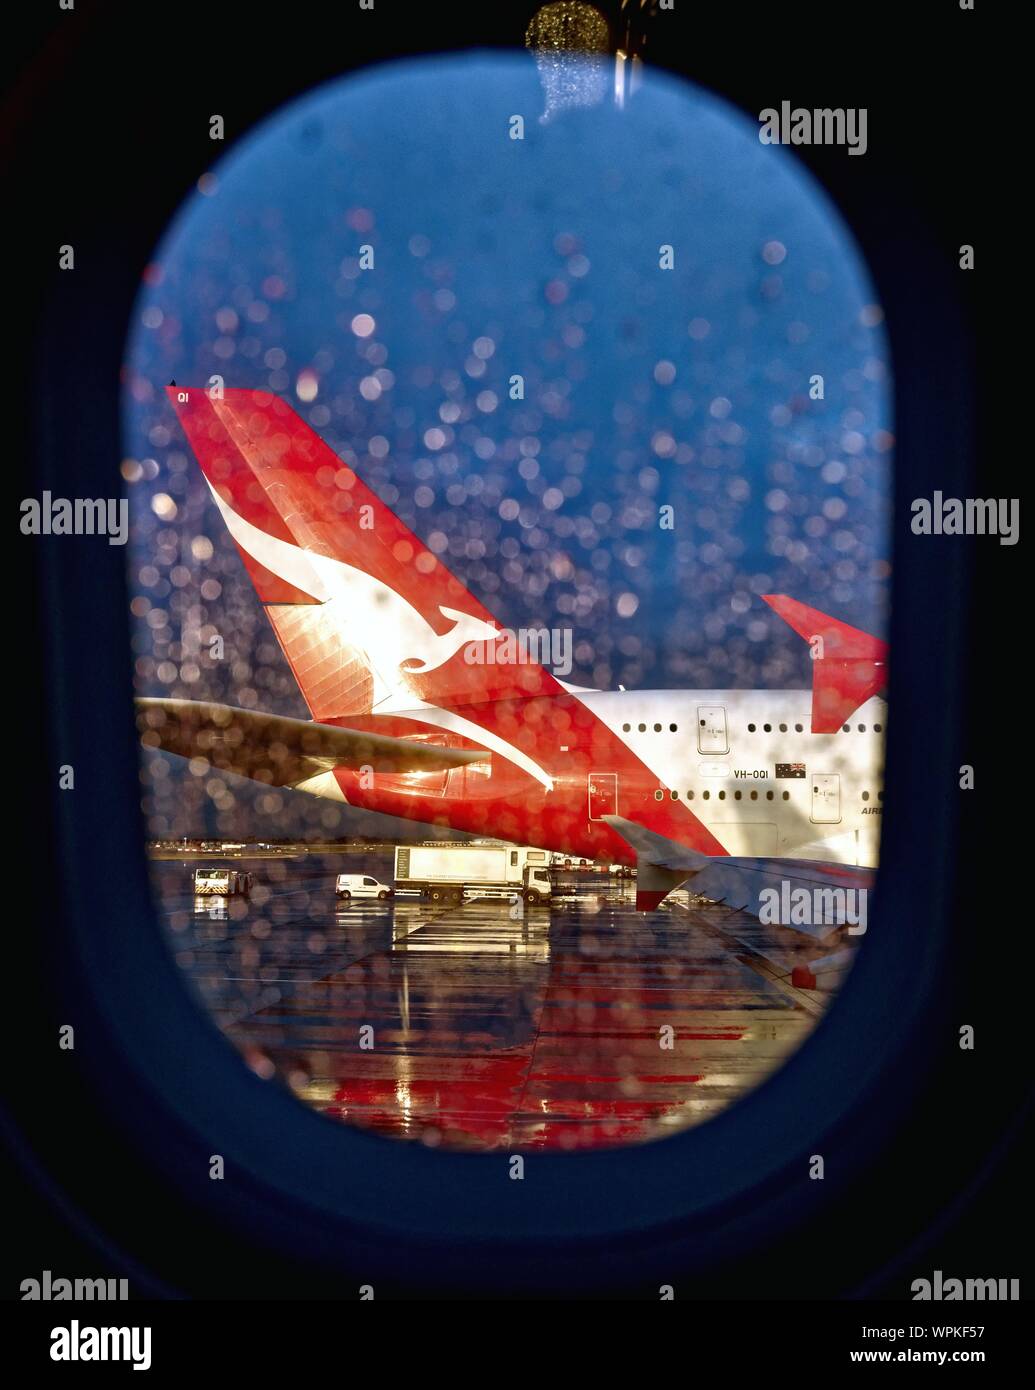 The tail plane of the Qantas A380 super jumbo with the company logo kangaroo as seen through an adjacent passenger jet window Heathrow London UK Stock Photo